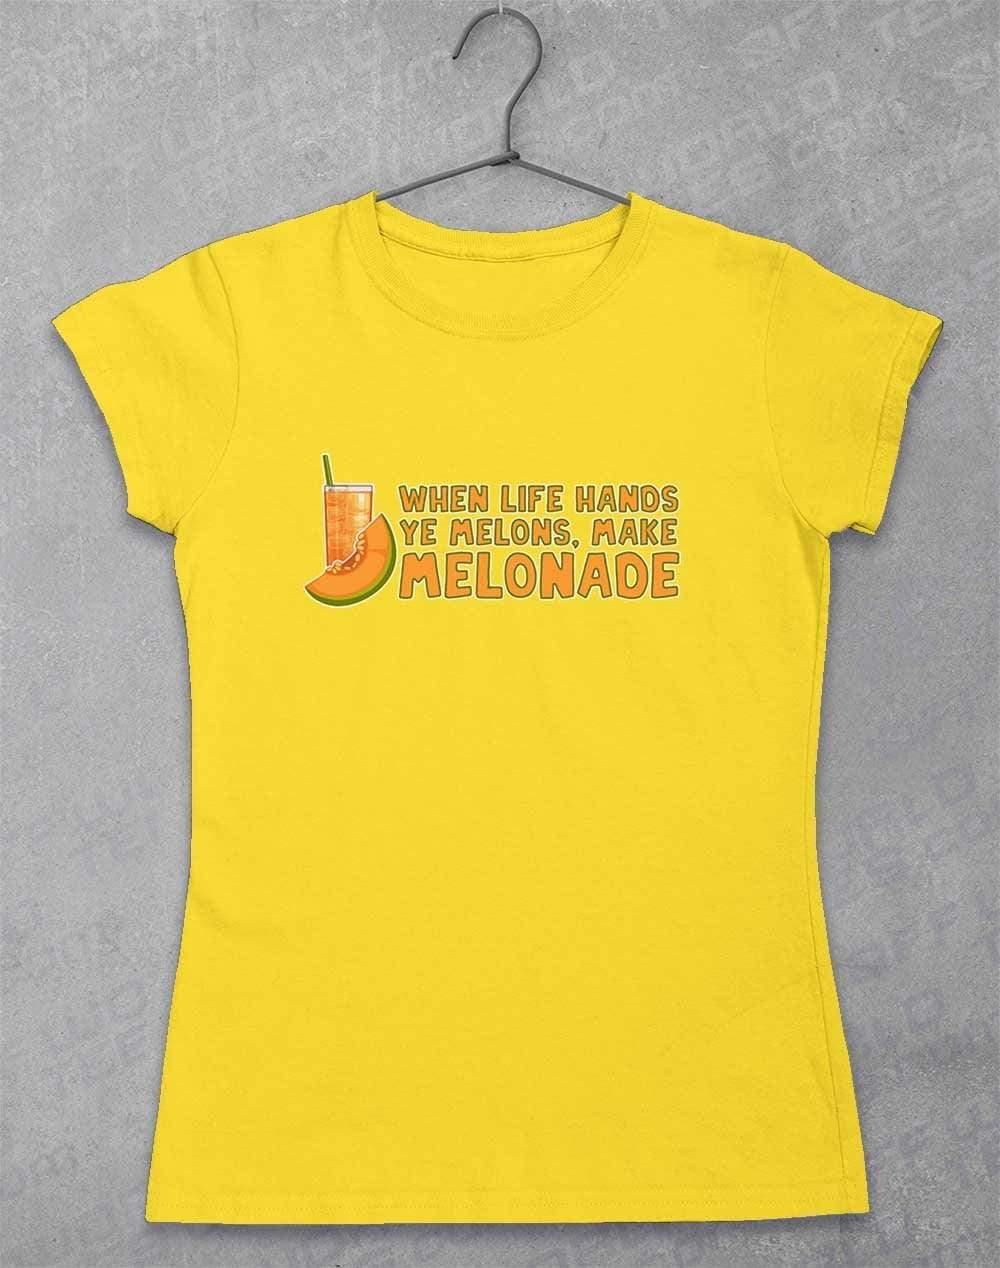 Make Melonade Womens T-Shirt 8-10 / Daisy  - Off World Tees